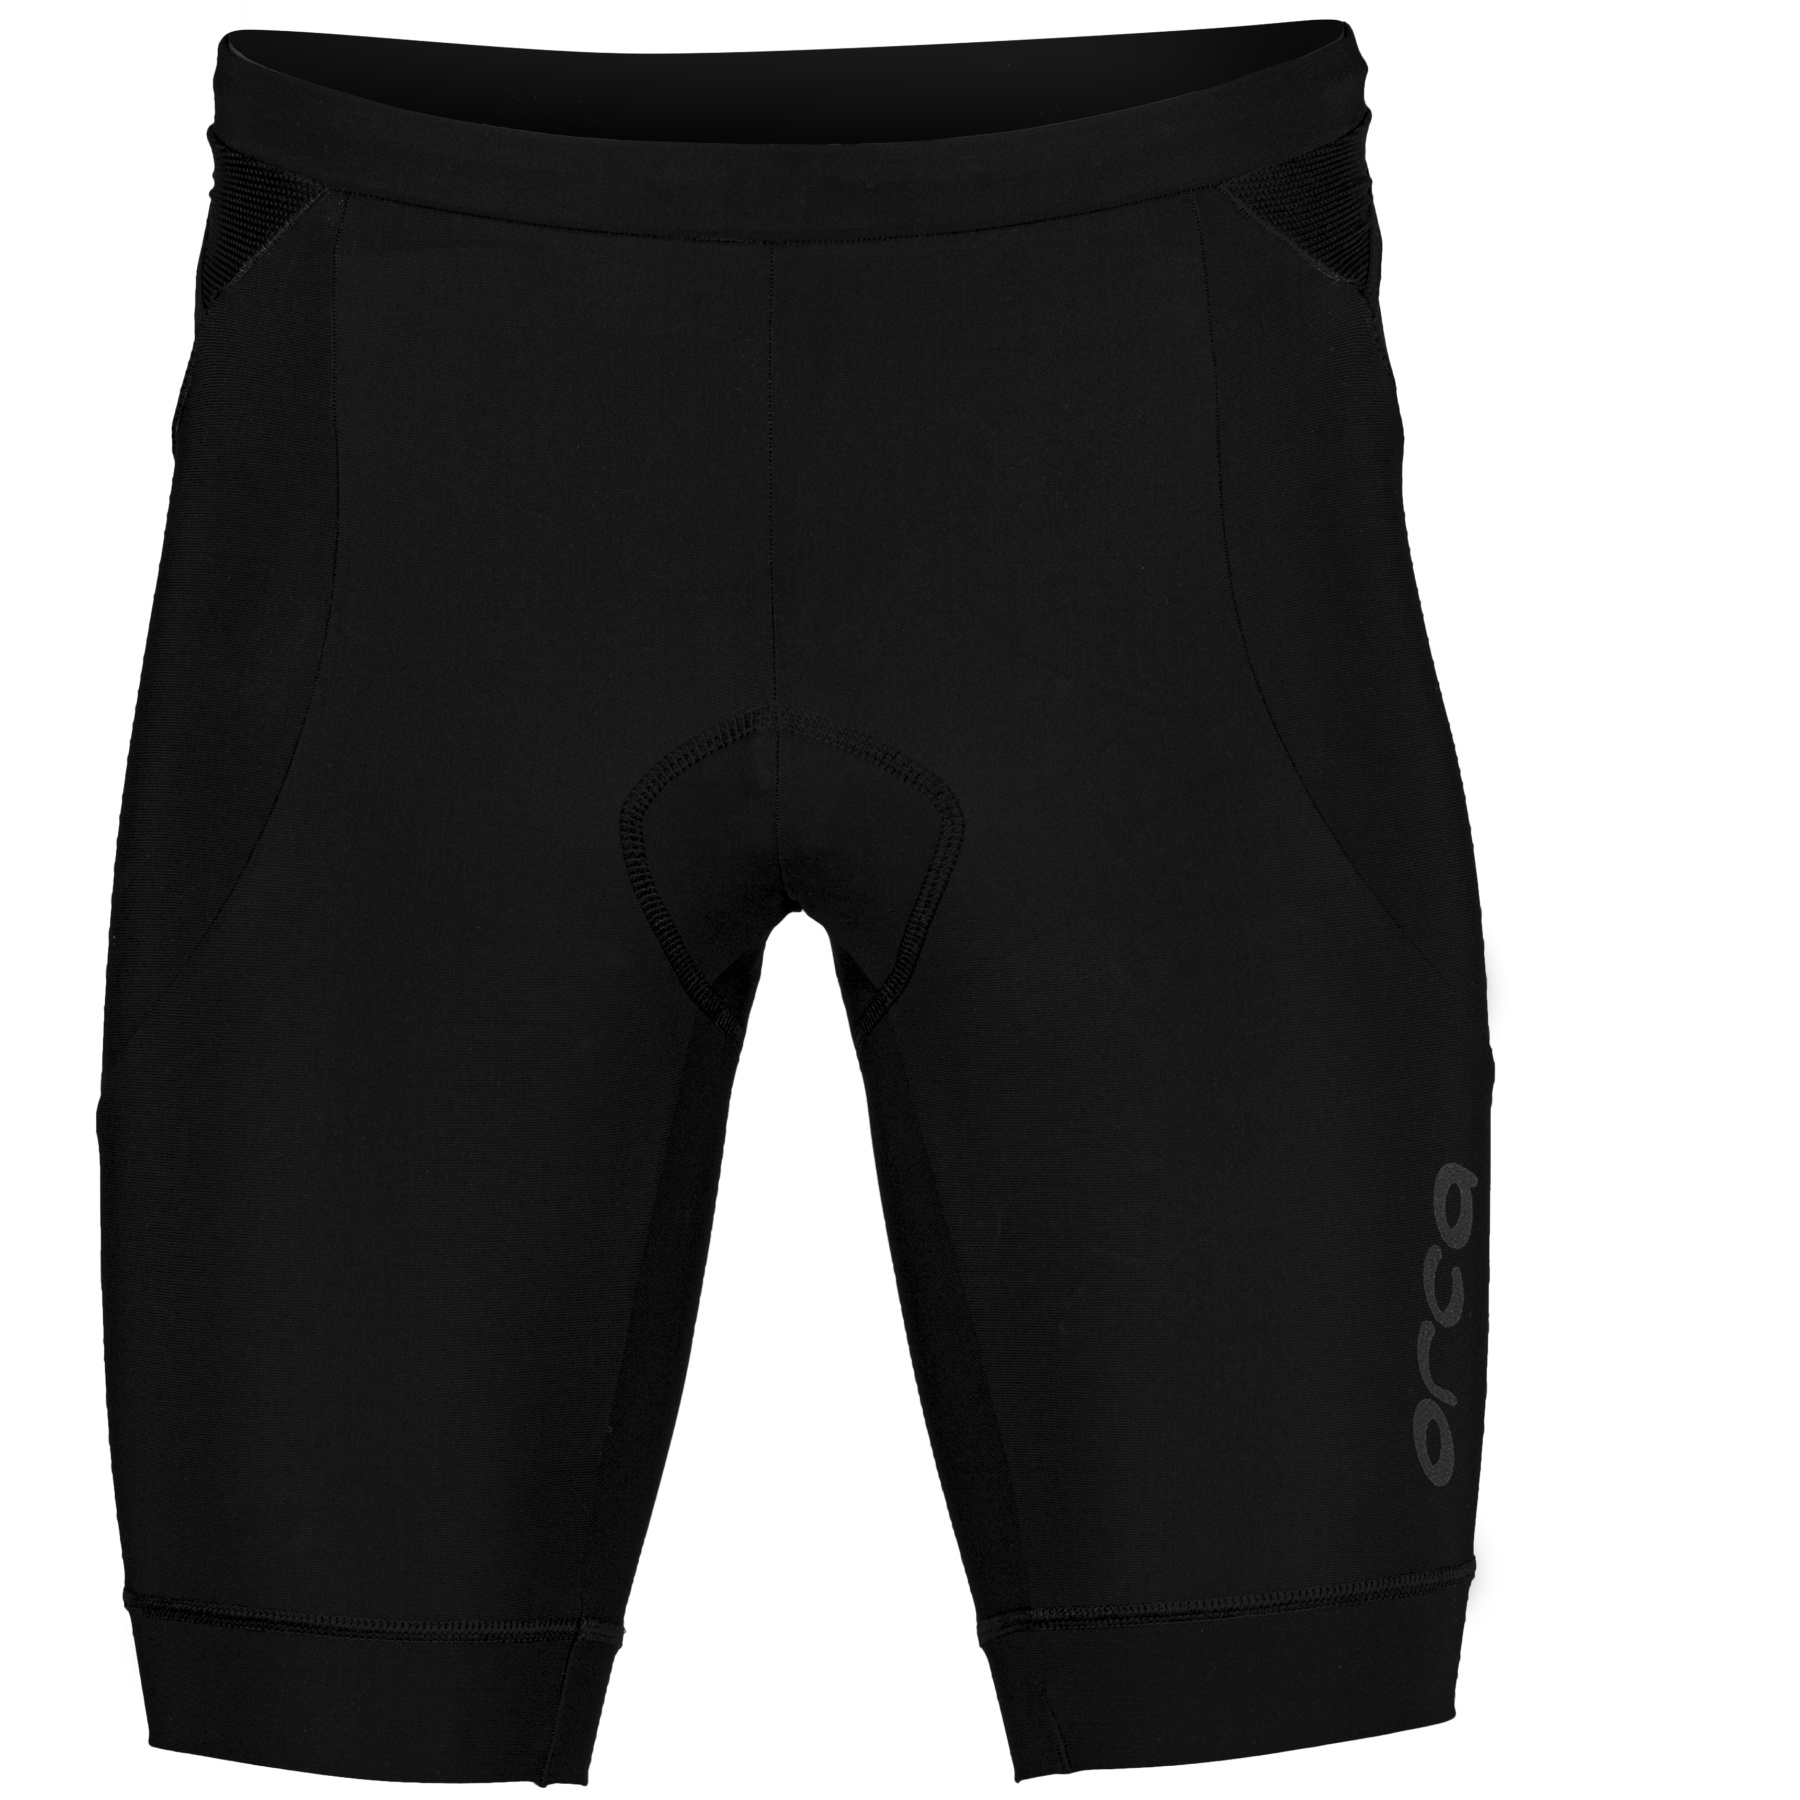 Productfoto van Orca Athlex Tri Shorts - black